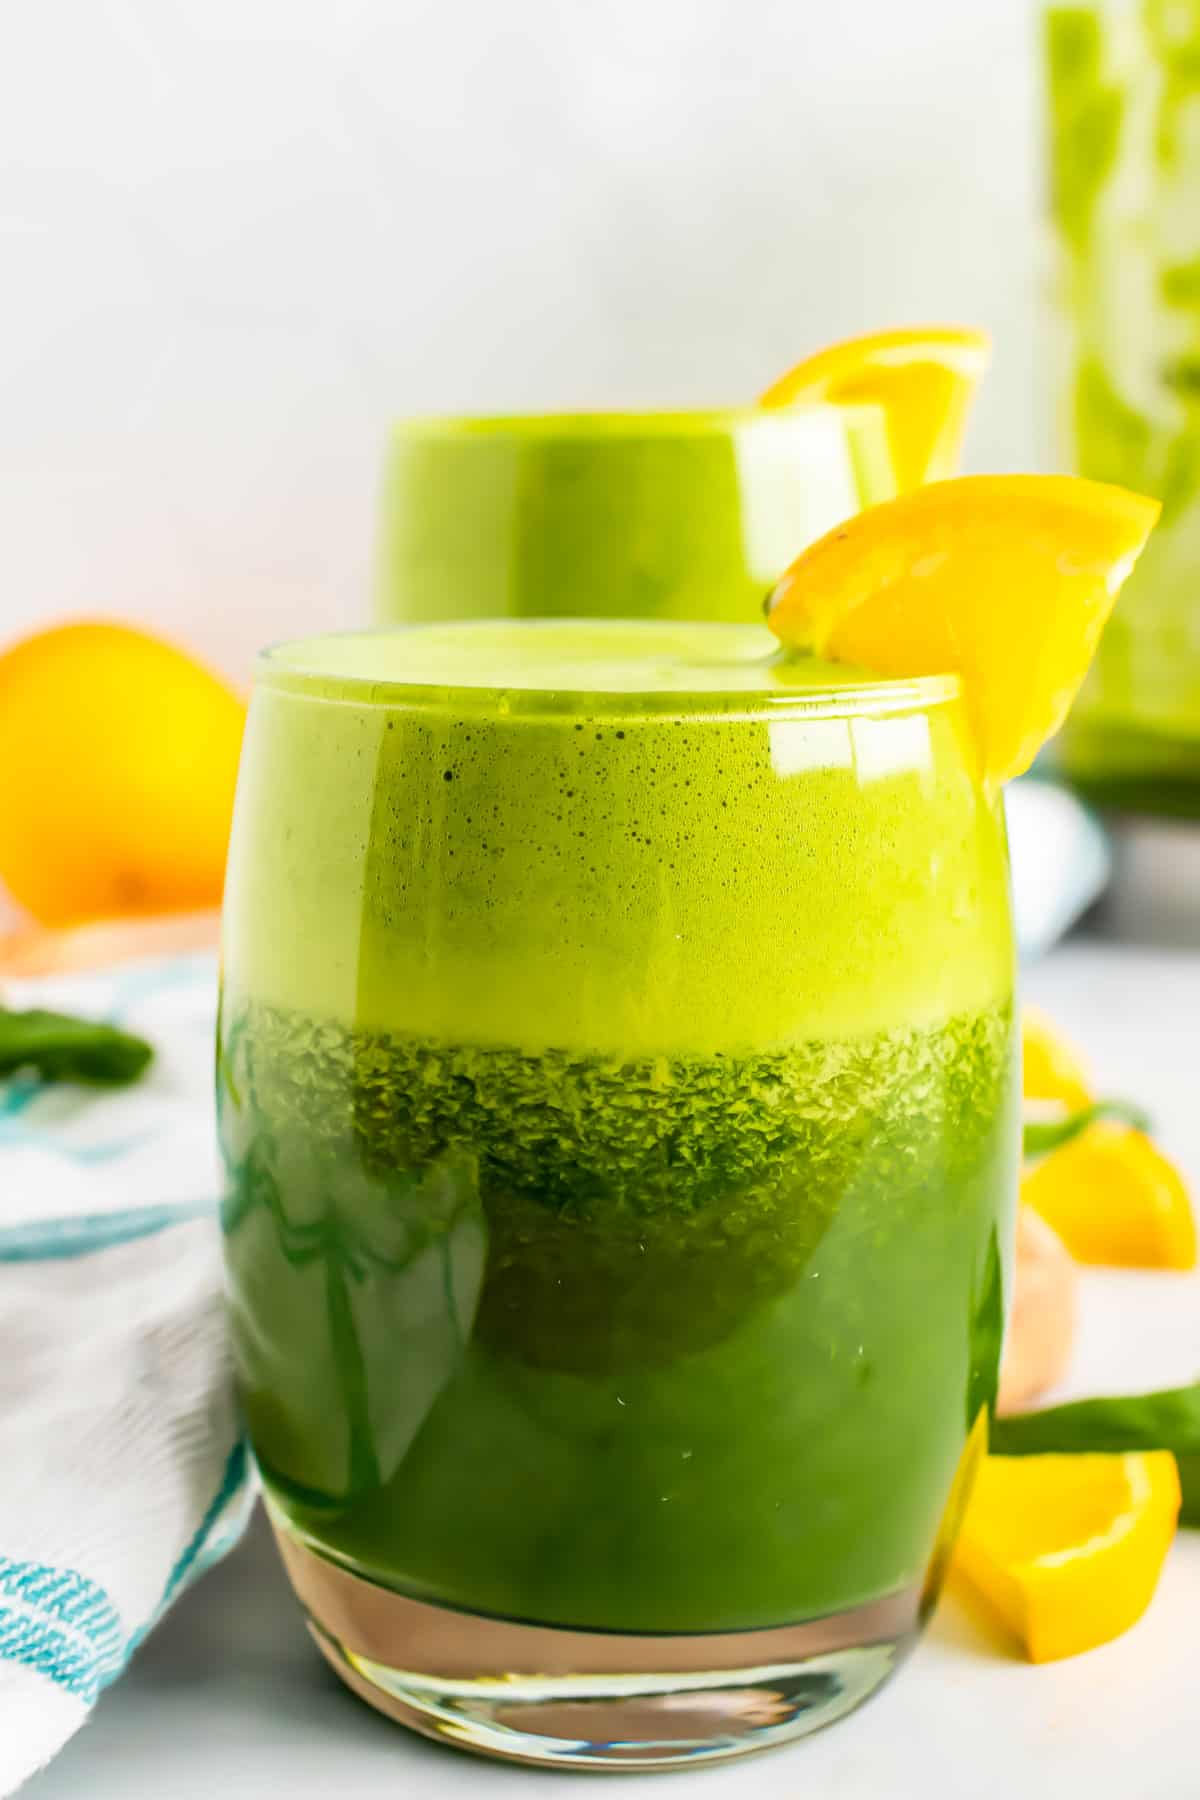 Blended green juice in glasses with orange slices.